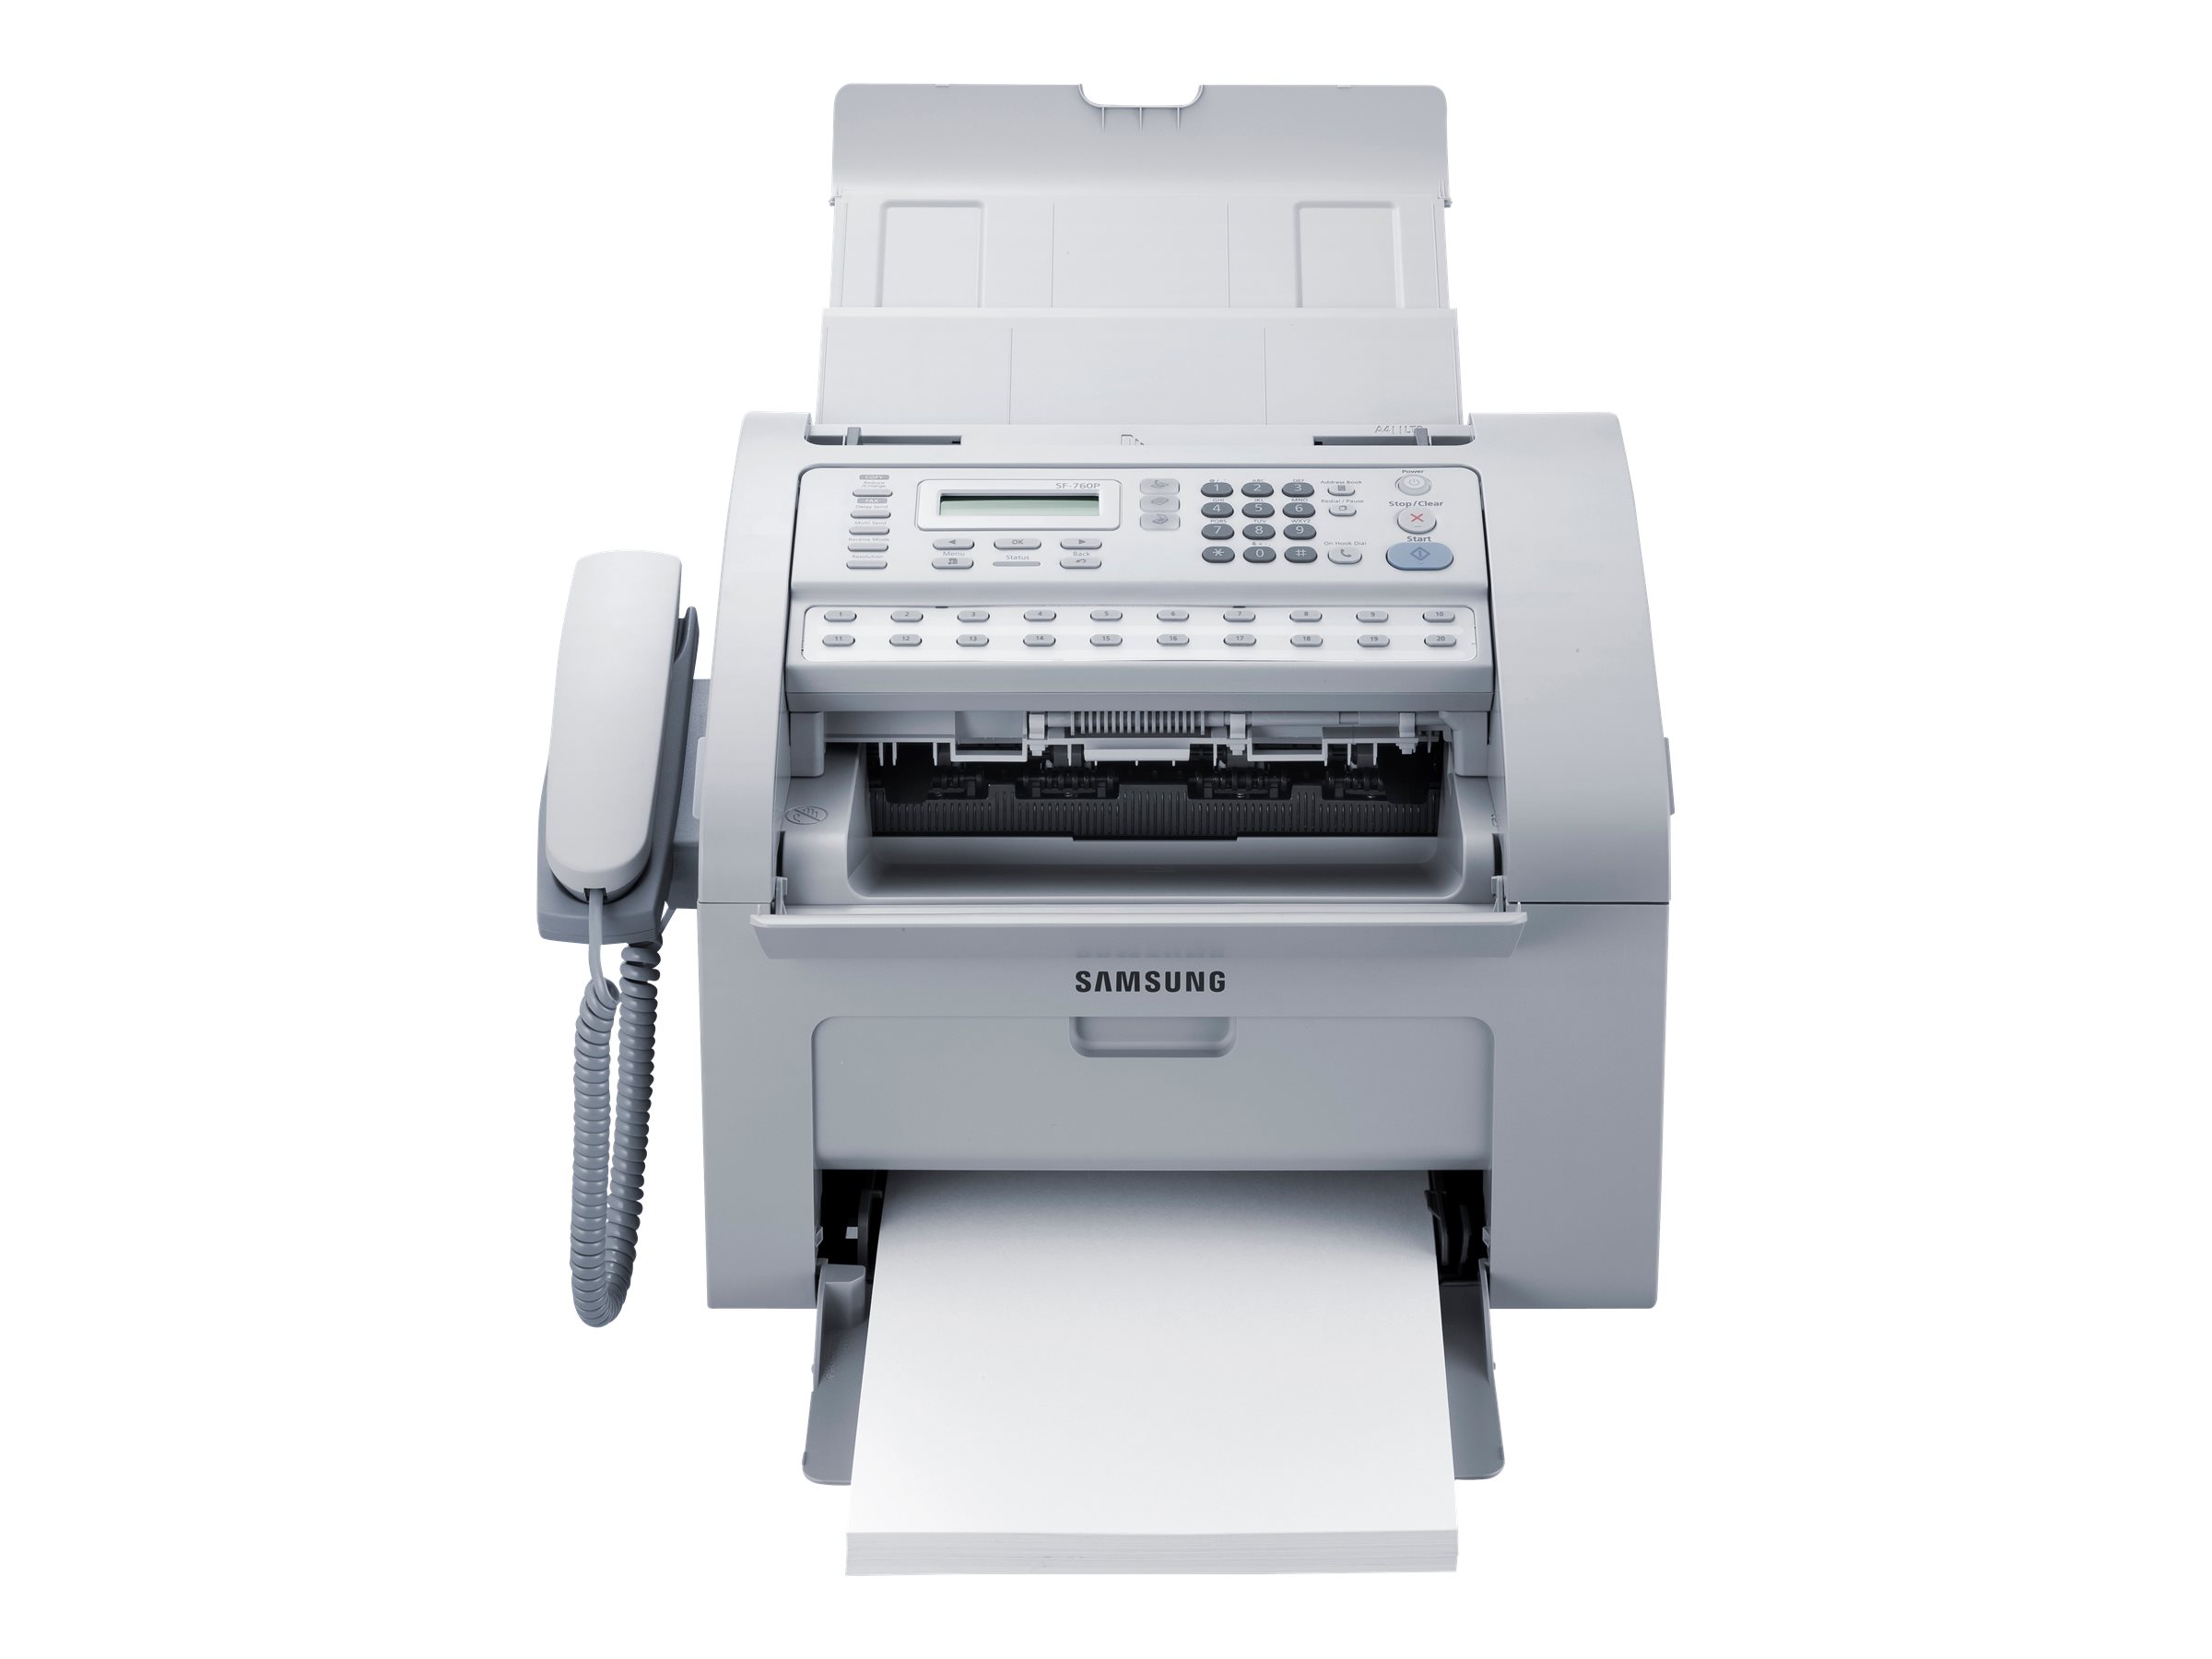 Samsung SF-760 Laser Multifunction Printer series